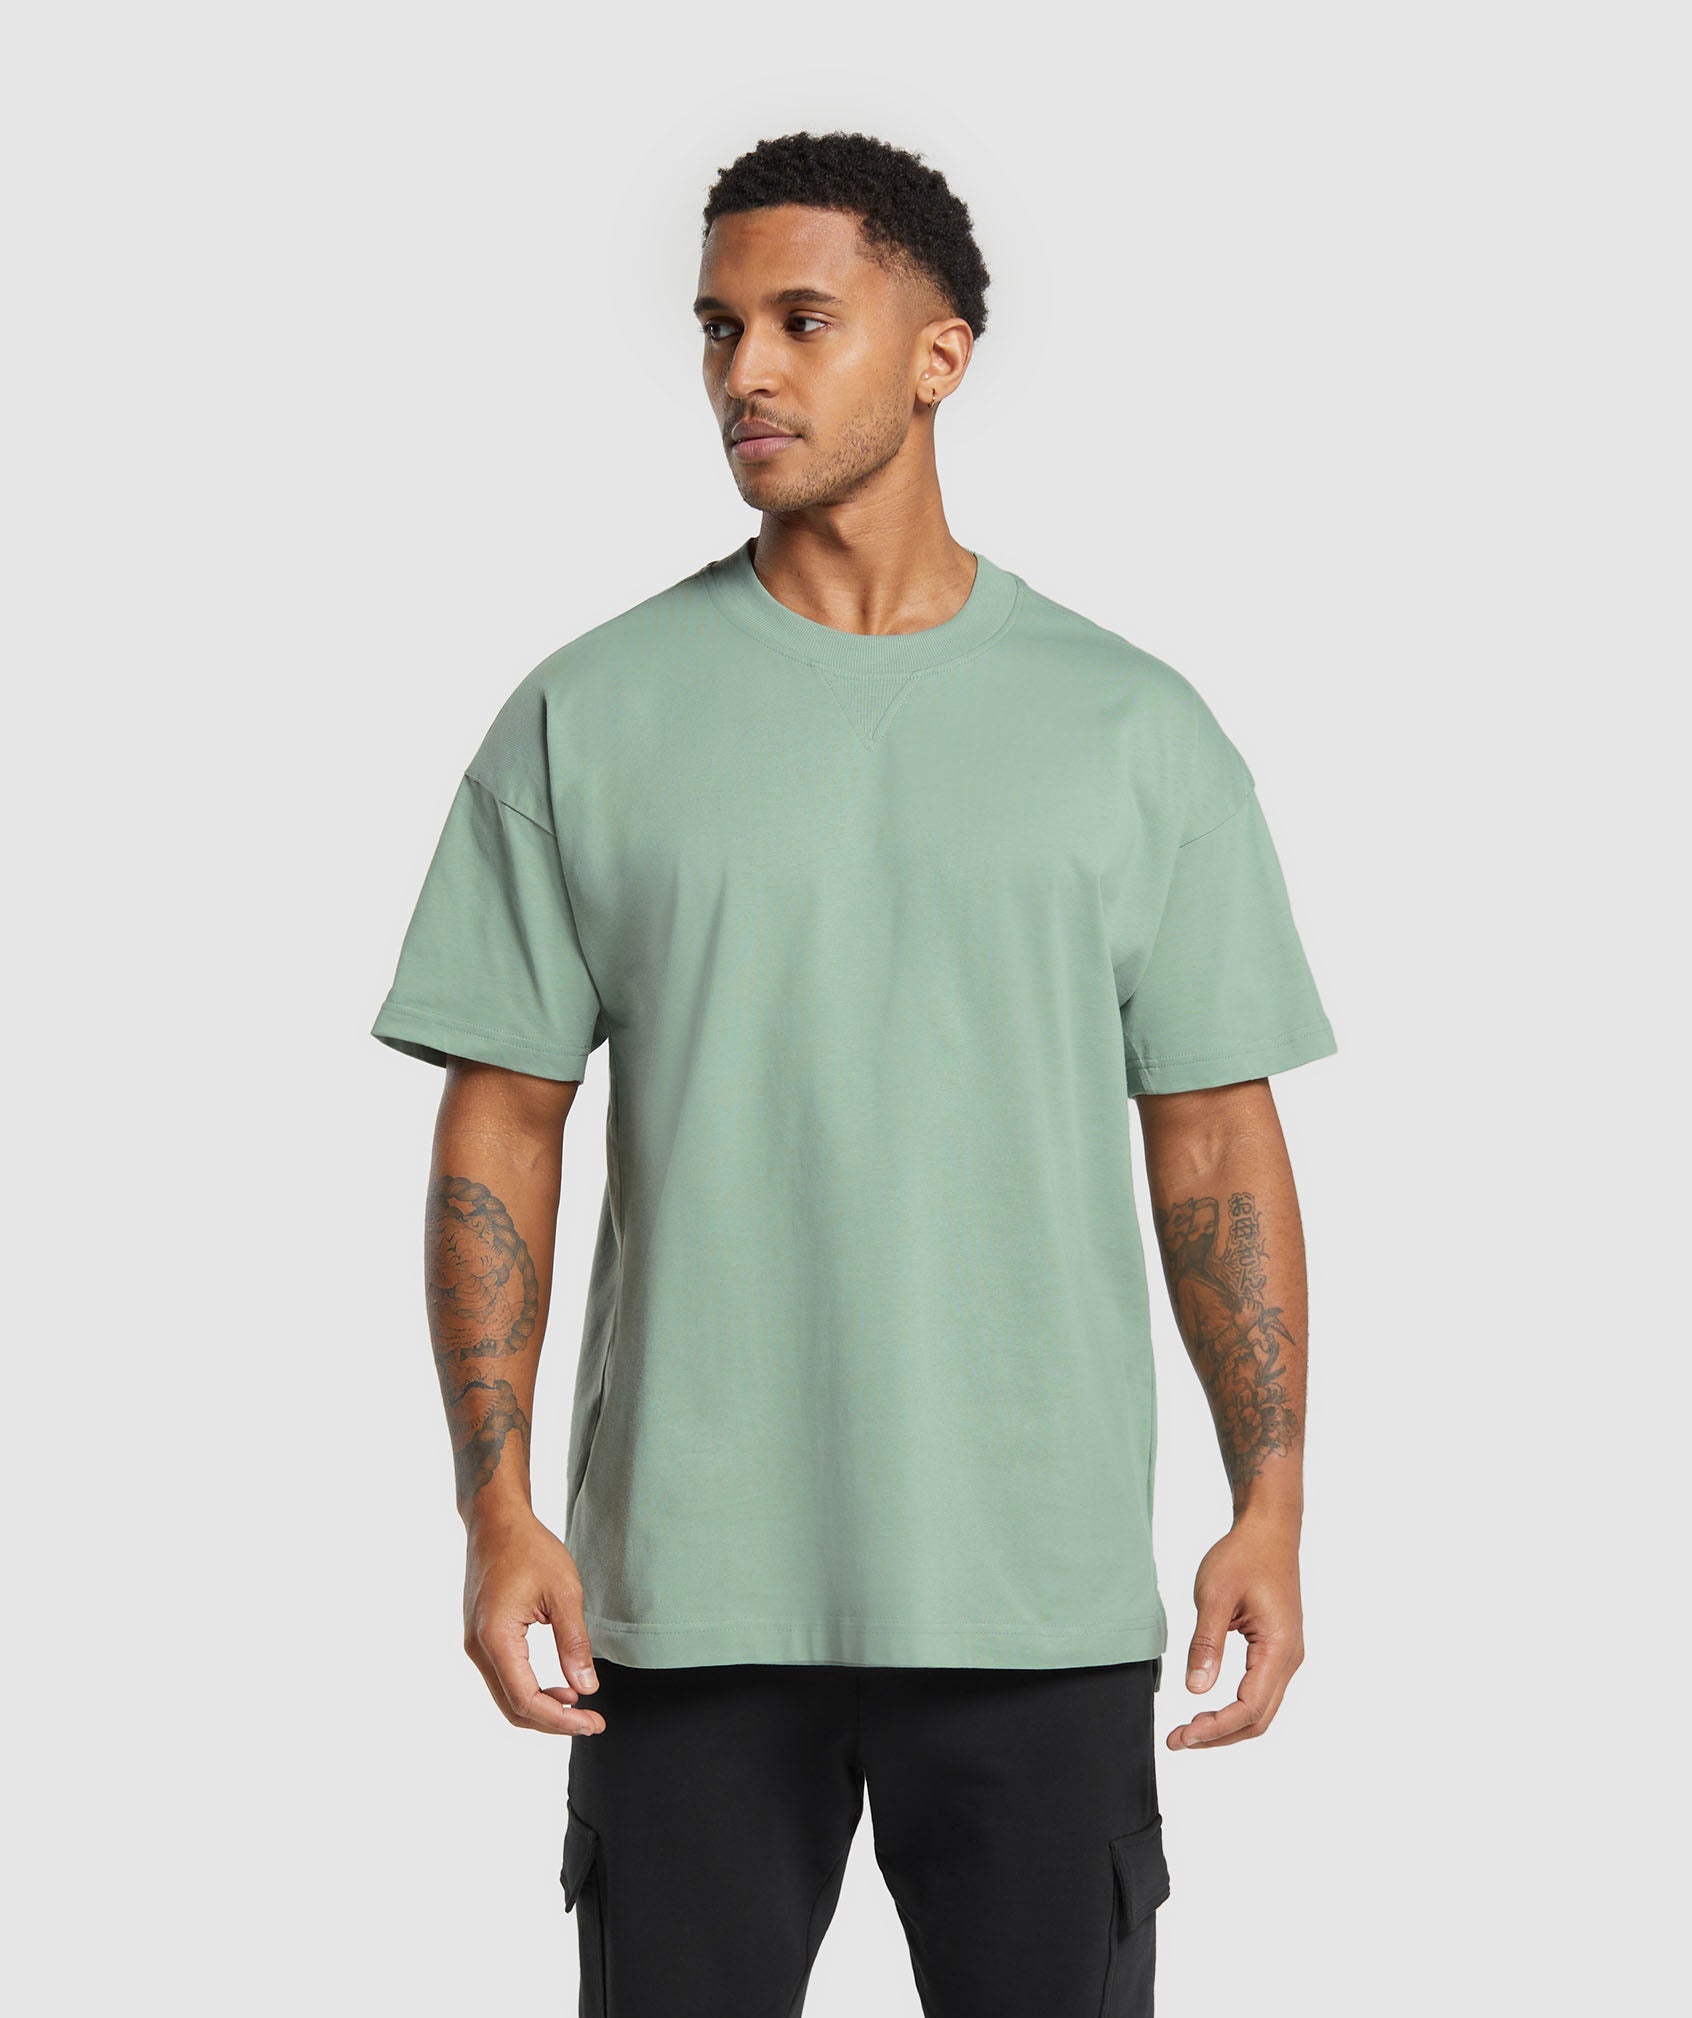 Rest Day Essentials T-Shirt in Dollar Green - view 1